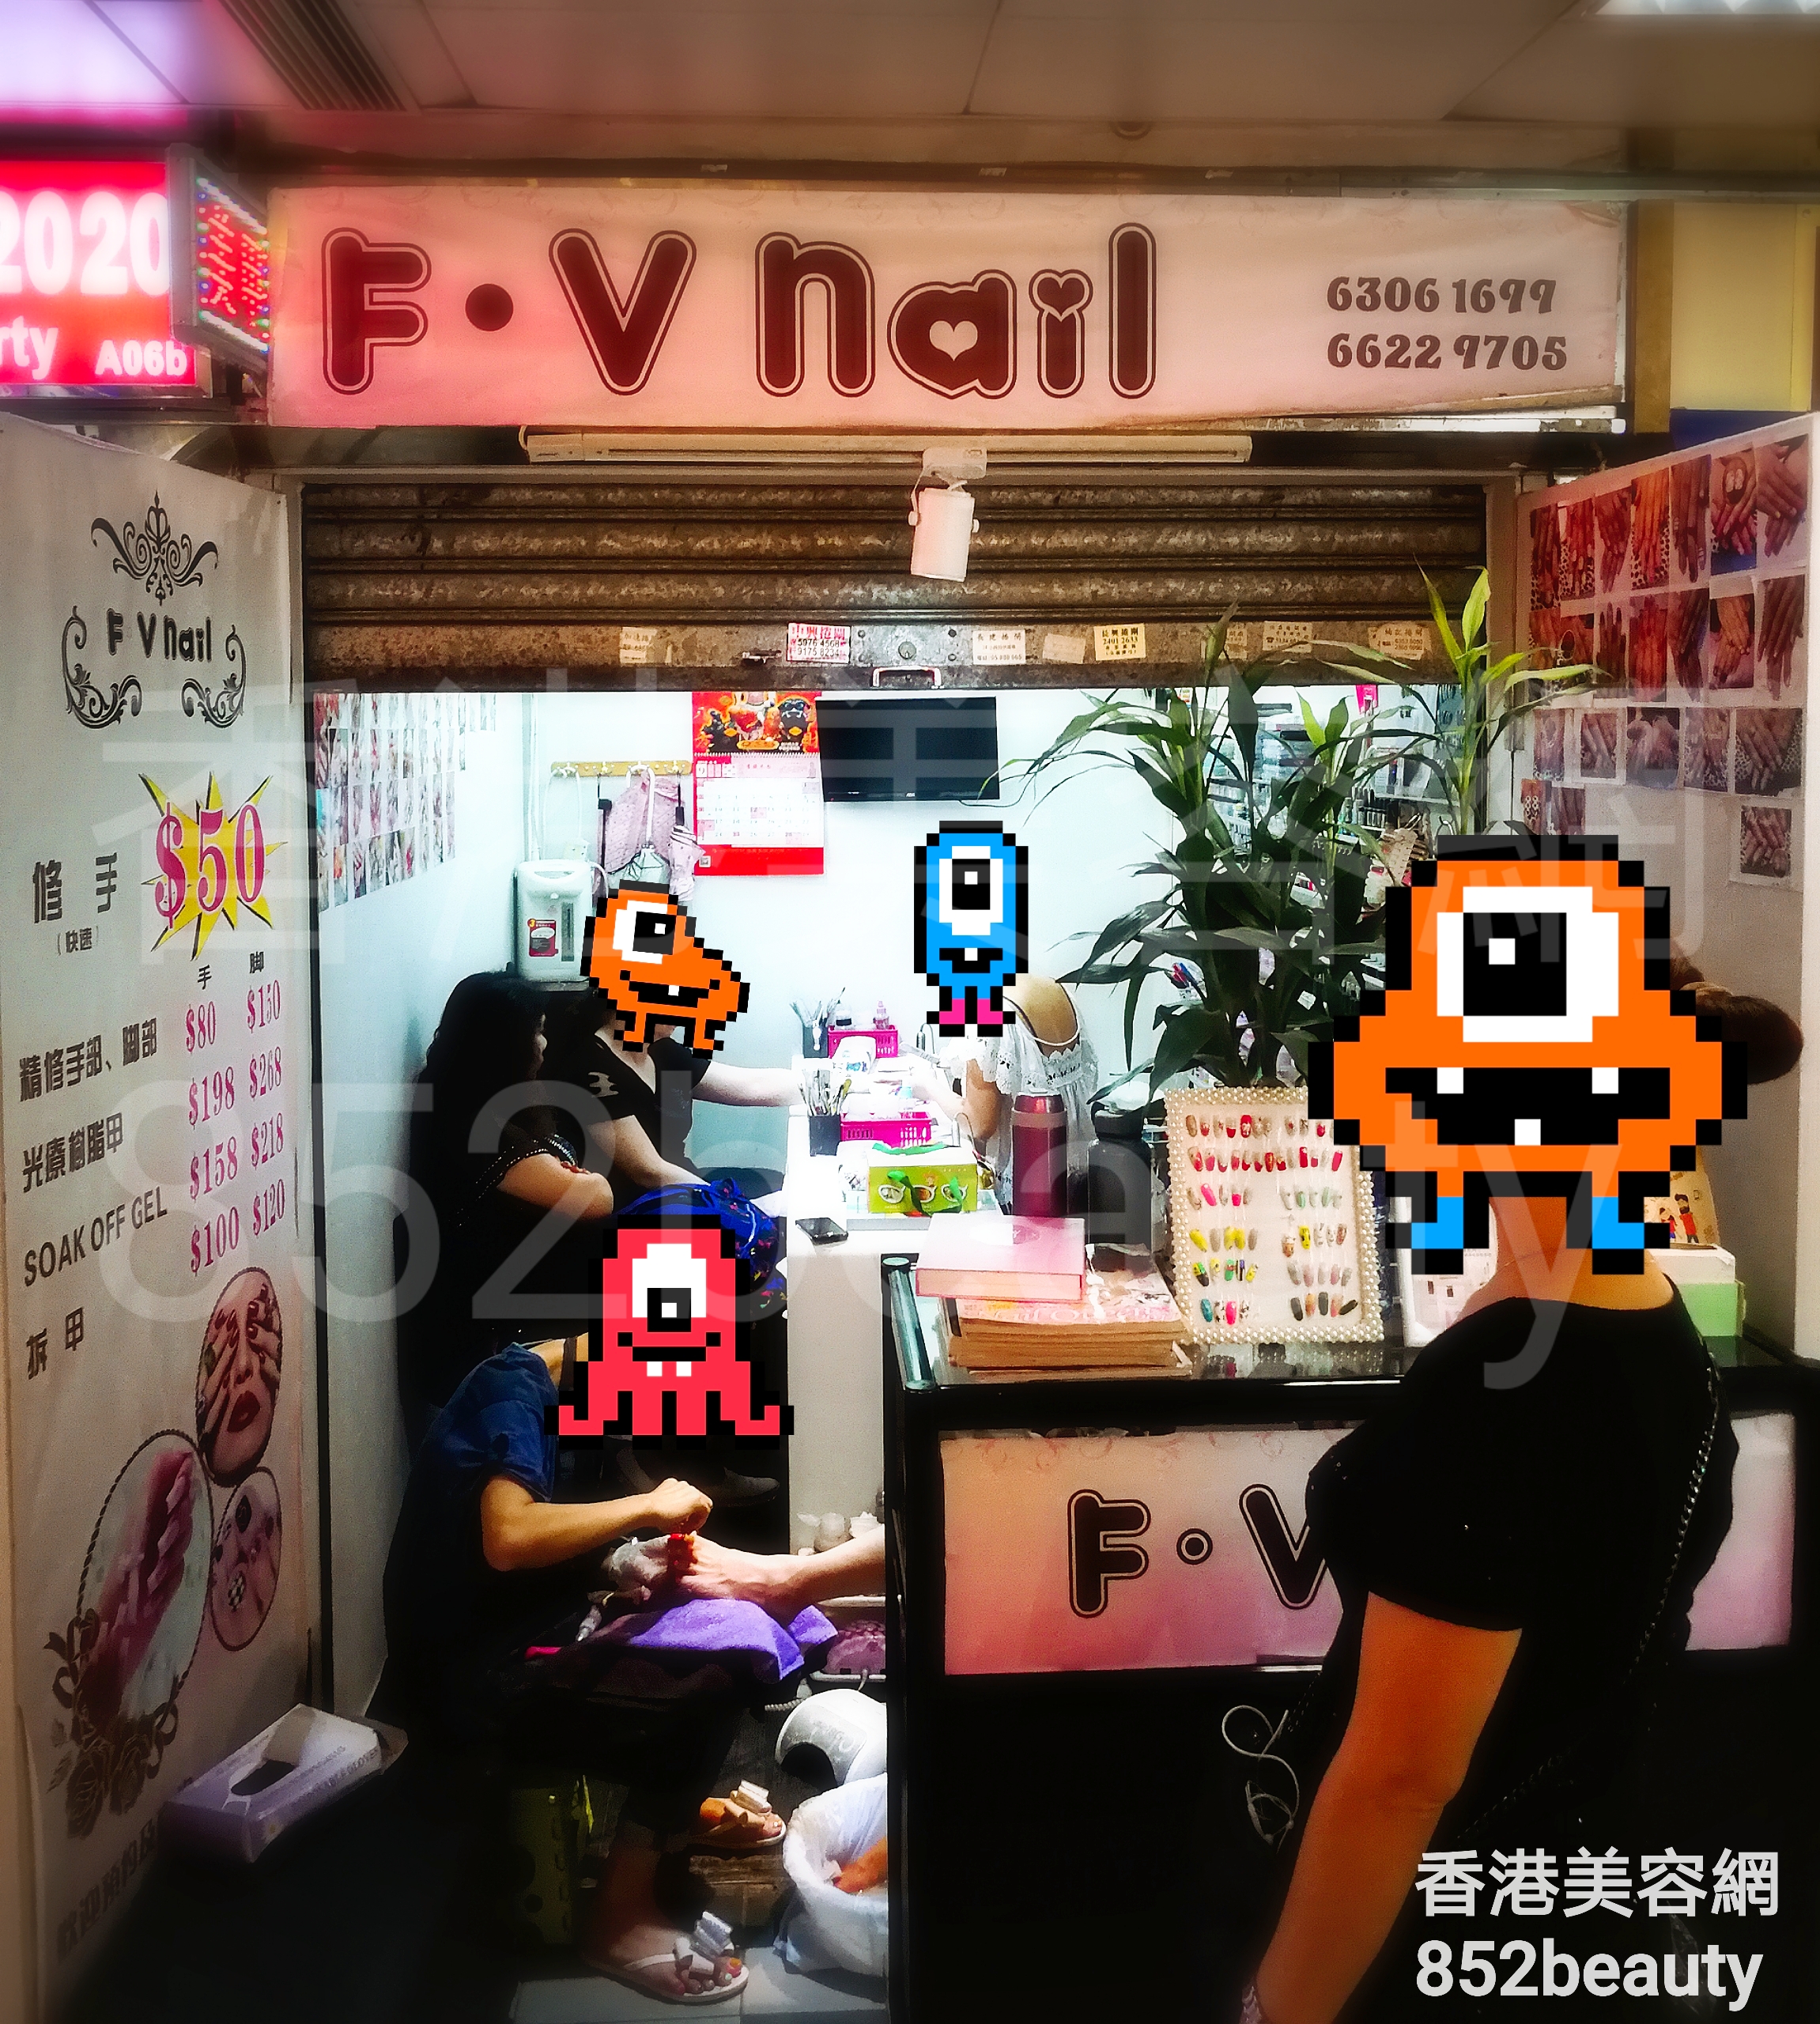 香港美容網 Hong Kong Beauty Salon 美容院 / 美容師: F。V nail